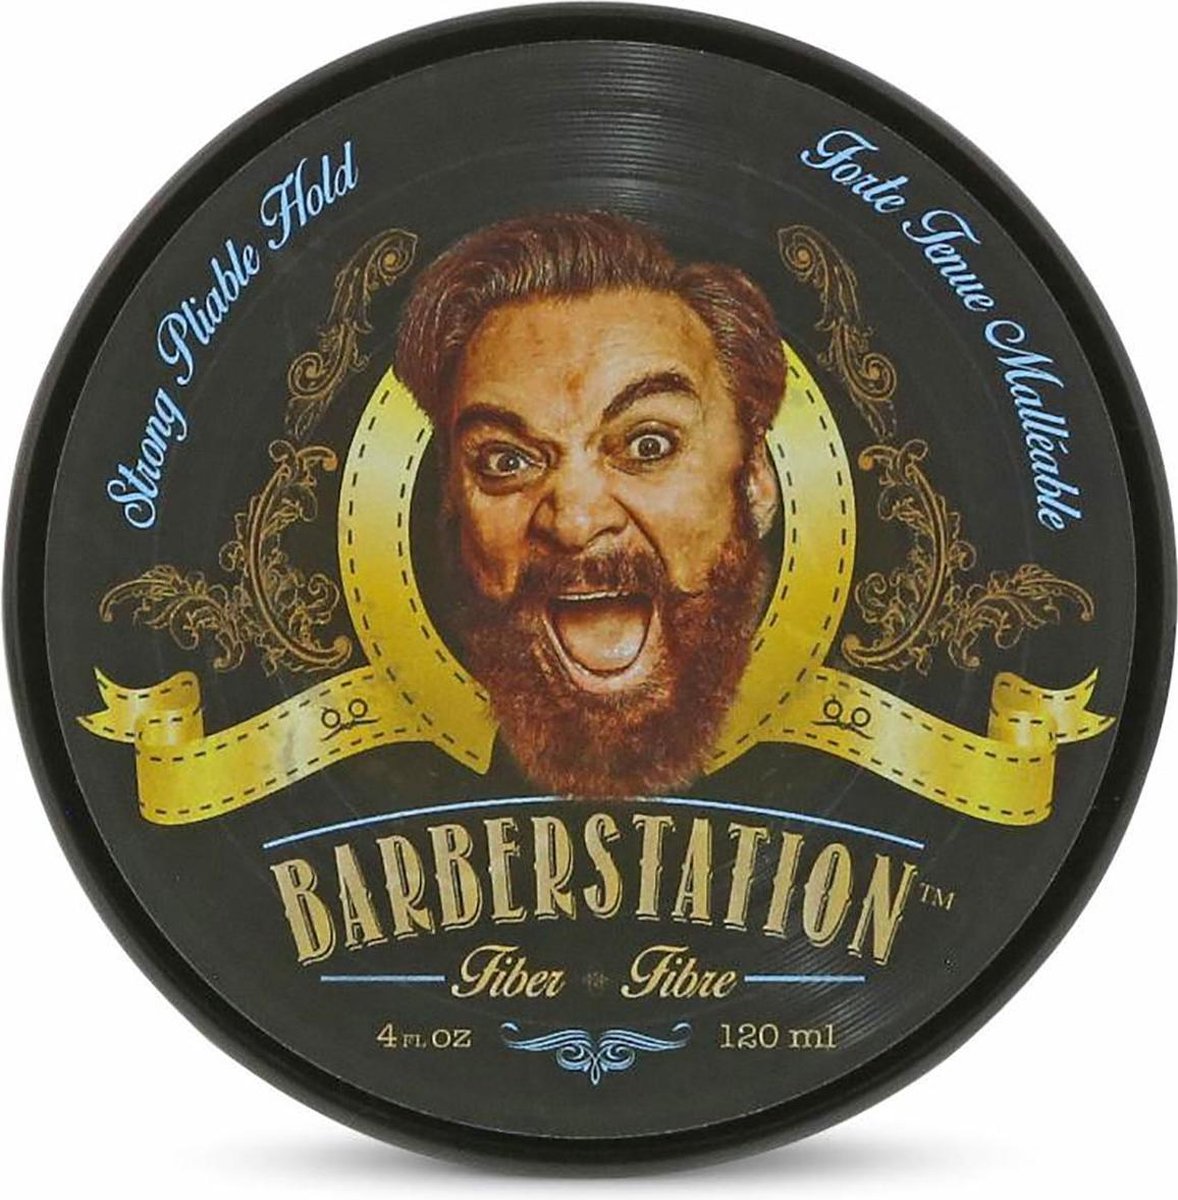 Barberstation - Fiber - 120 ml